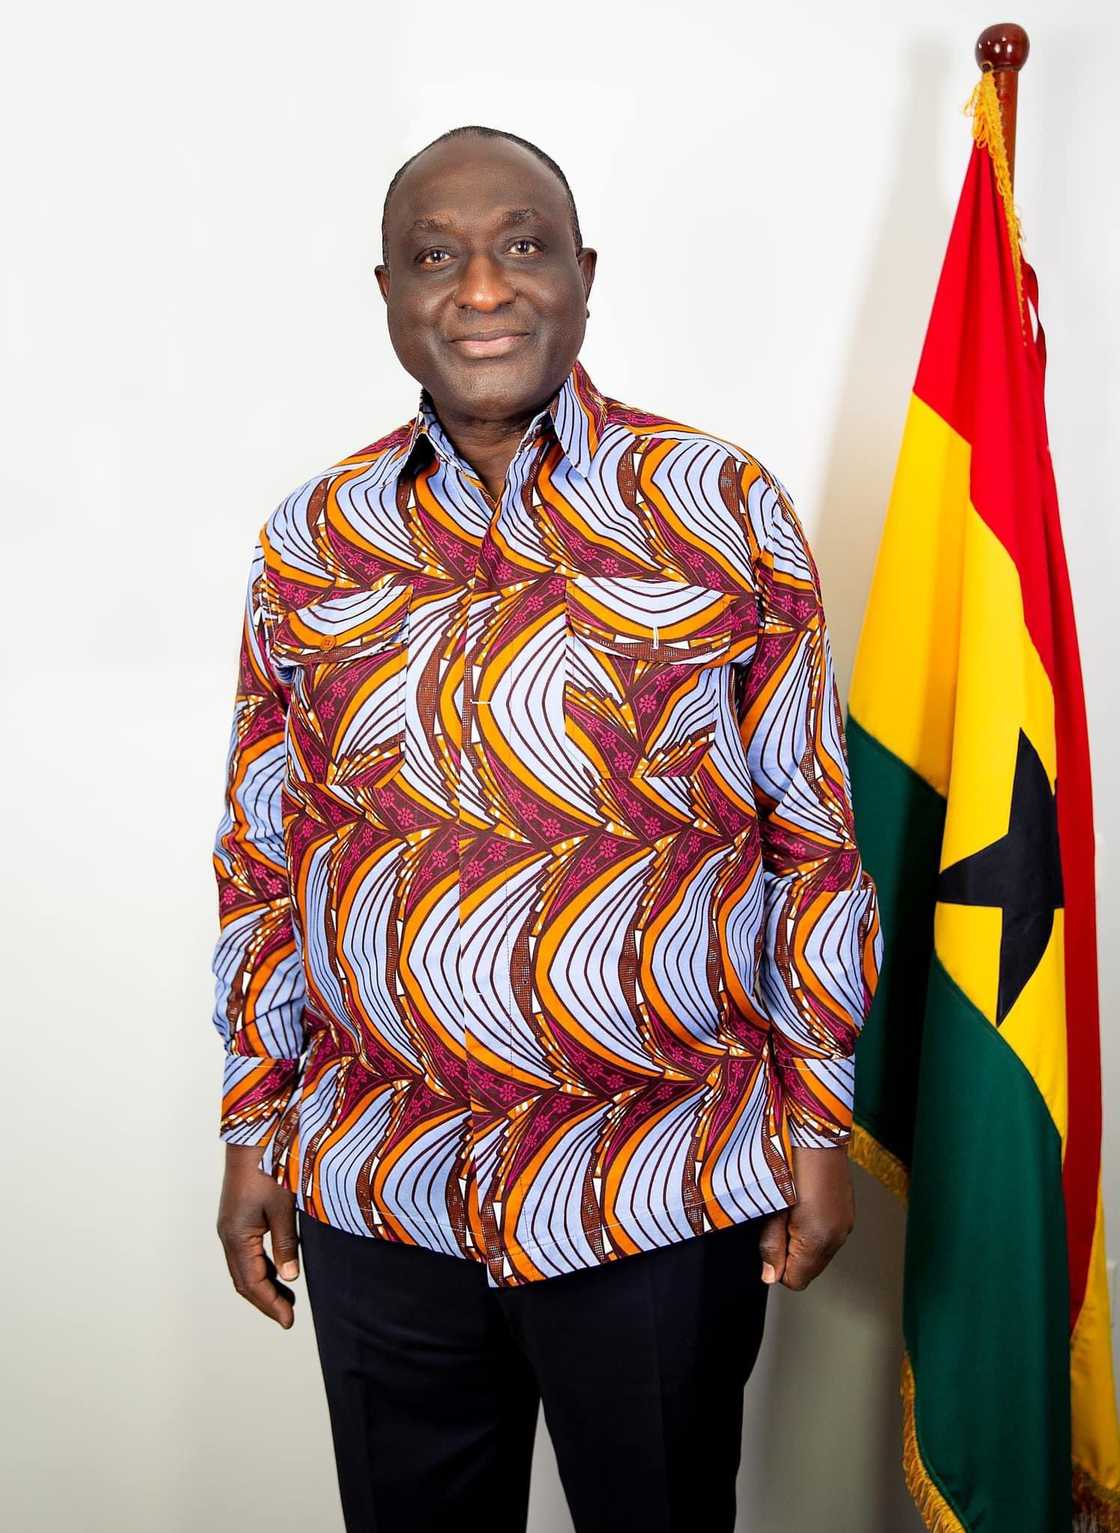 Alan Kyrematen wants to be president of Ghana